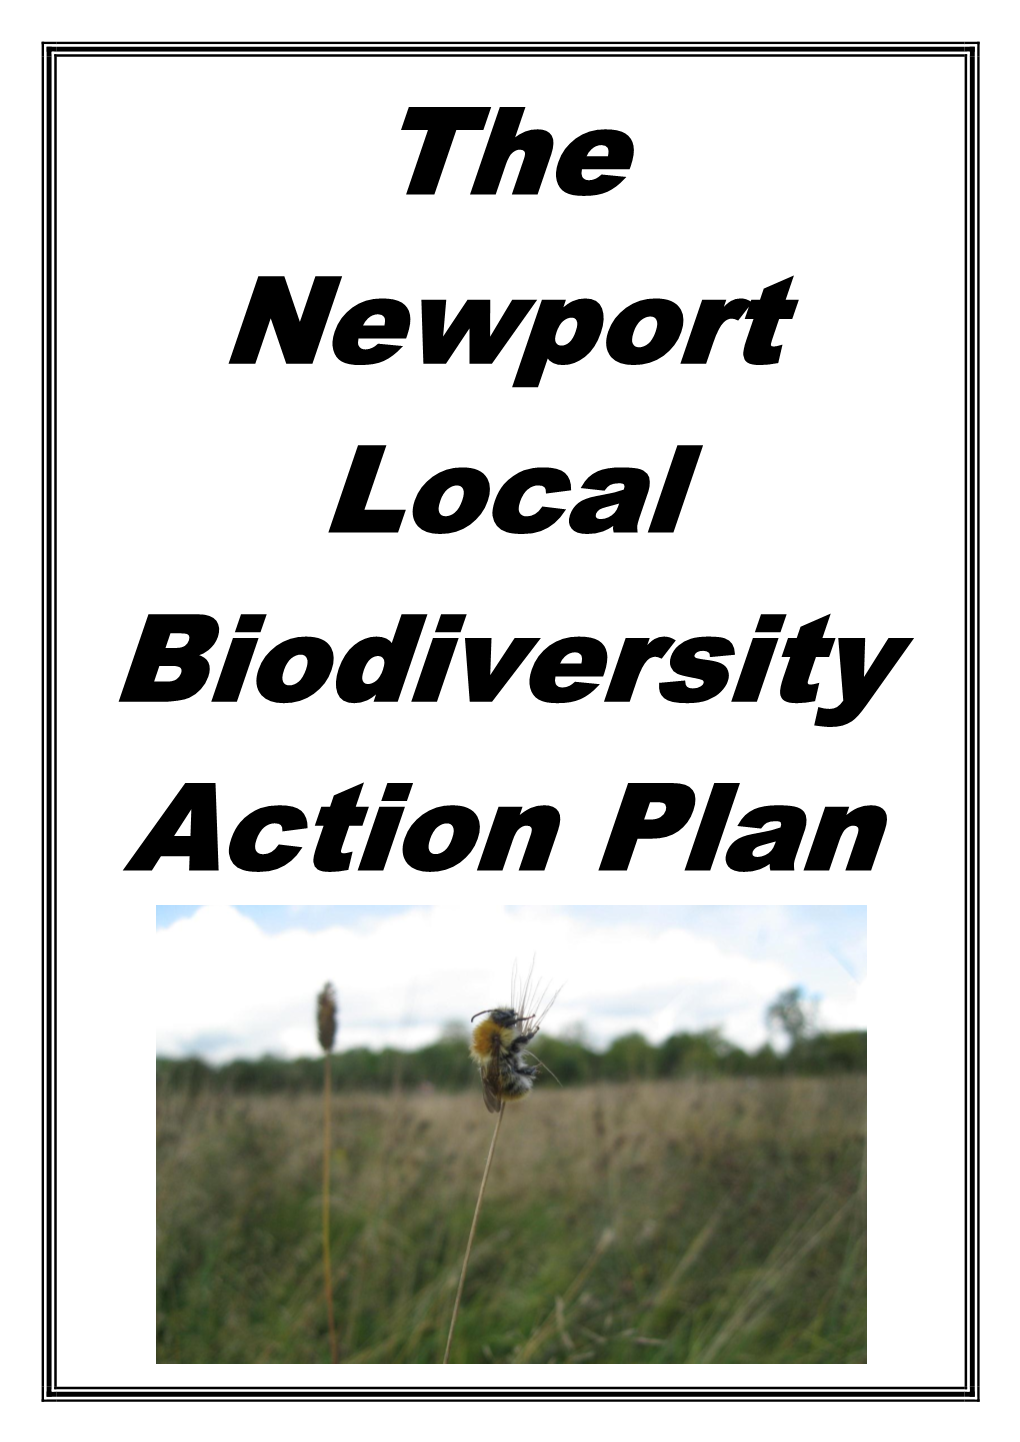 Download Newport's Local Biodiversity Action Plan (LBAP)